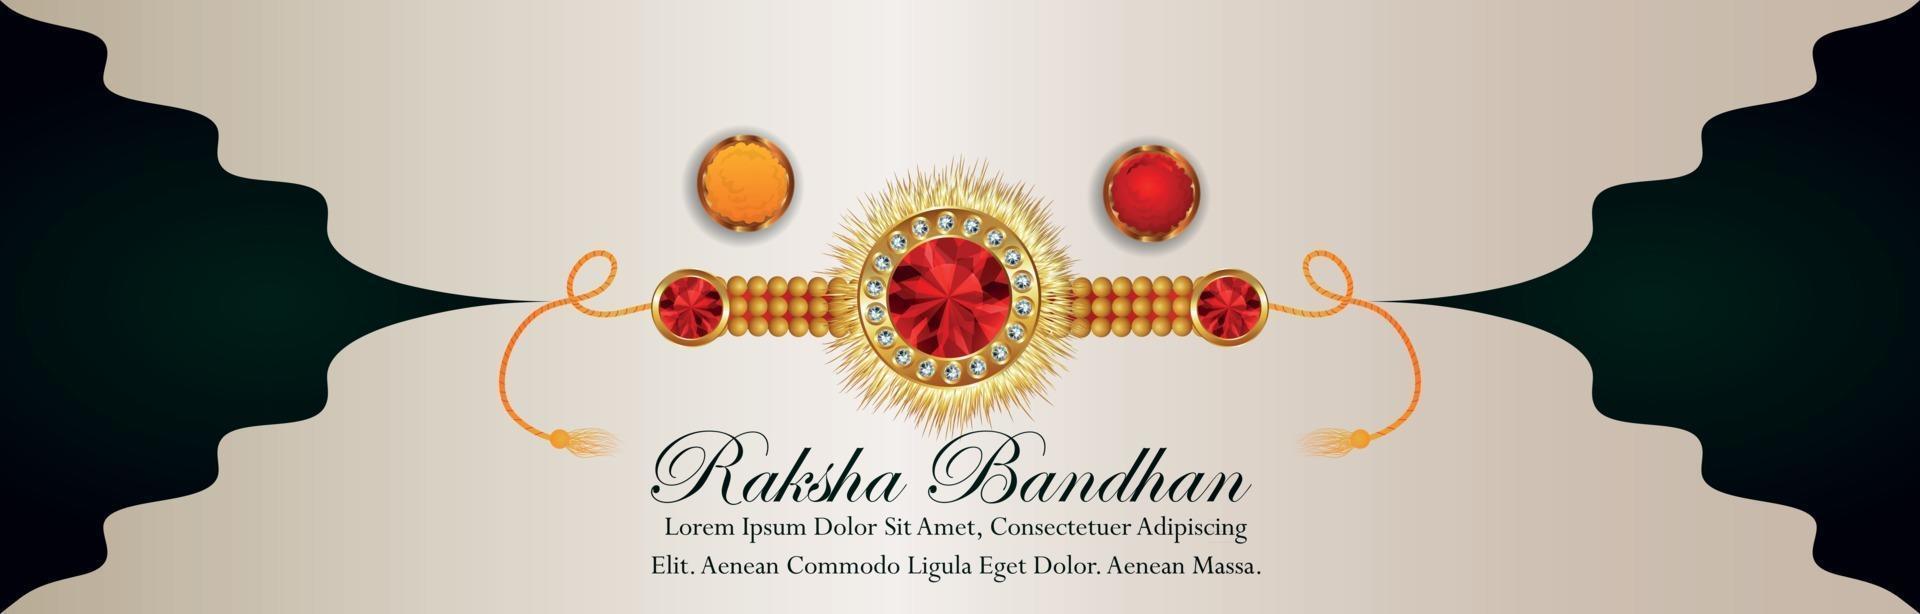 Happy raksha bandhan invitation banner with golden rakhi vector